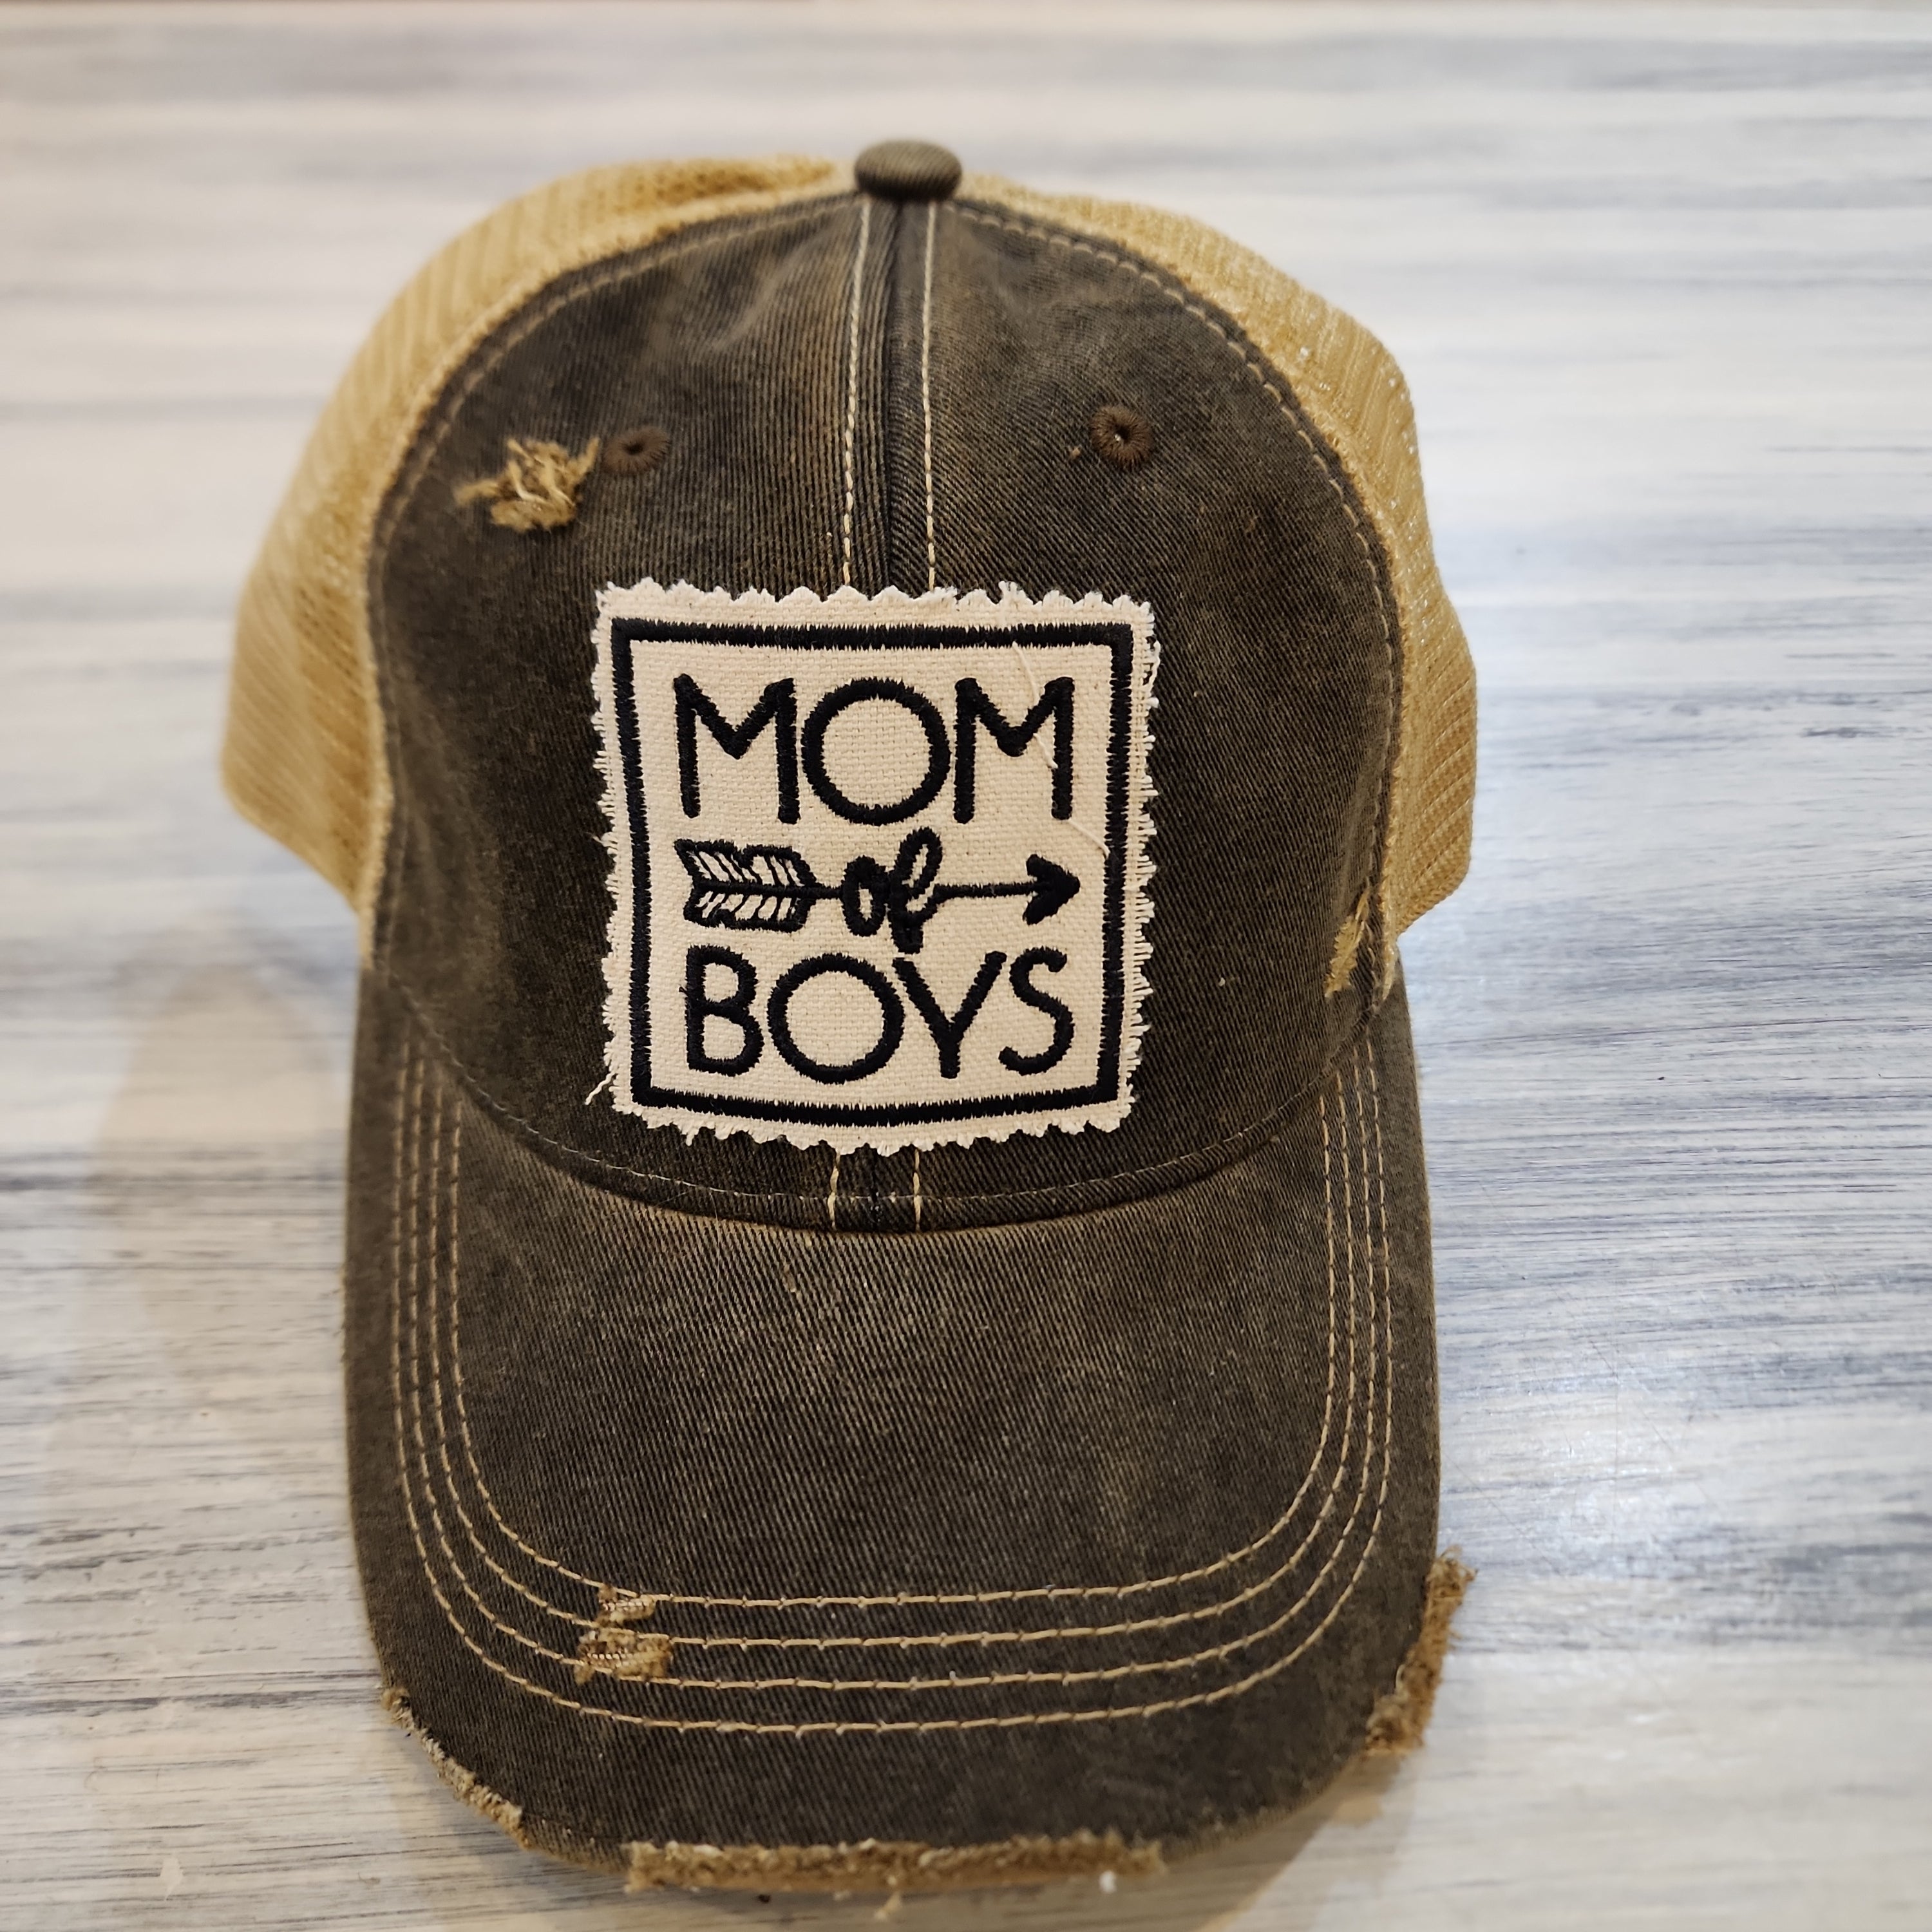 Mom of Boys Baseball Hat